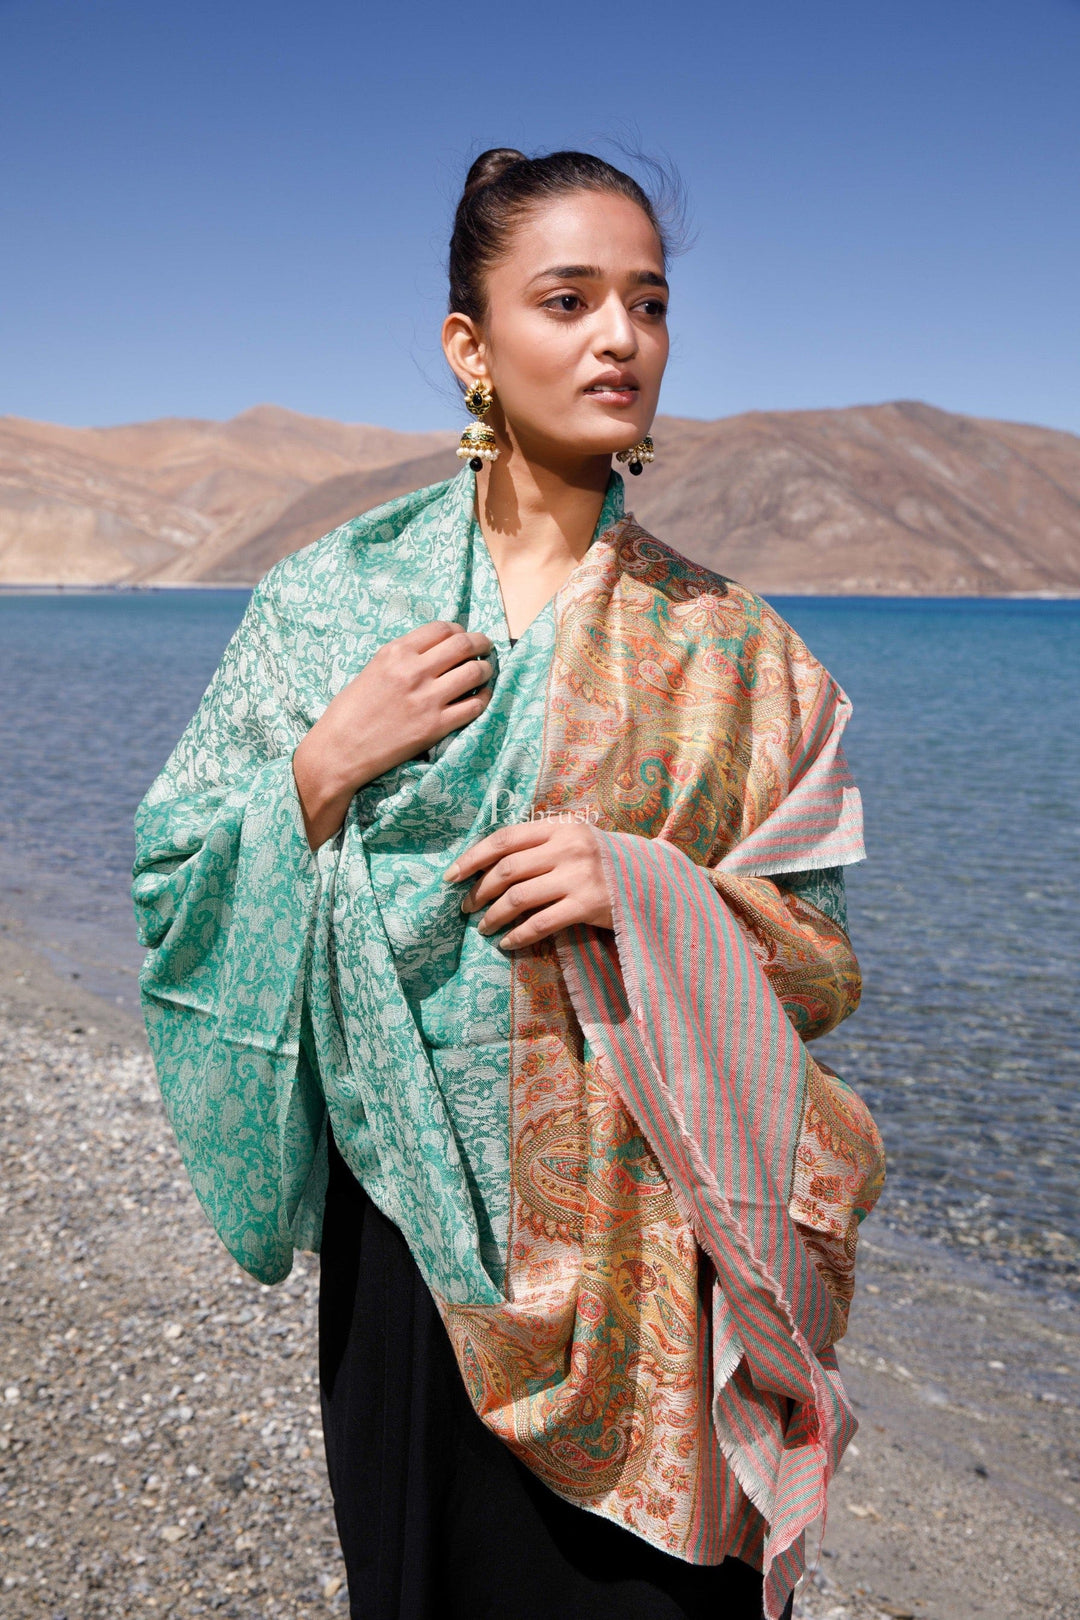 Pashtush Womens Extra Fine Wool Shawl, Solid Arabic Sea Green